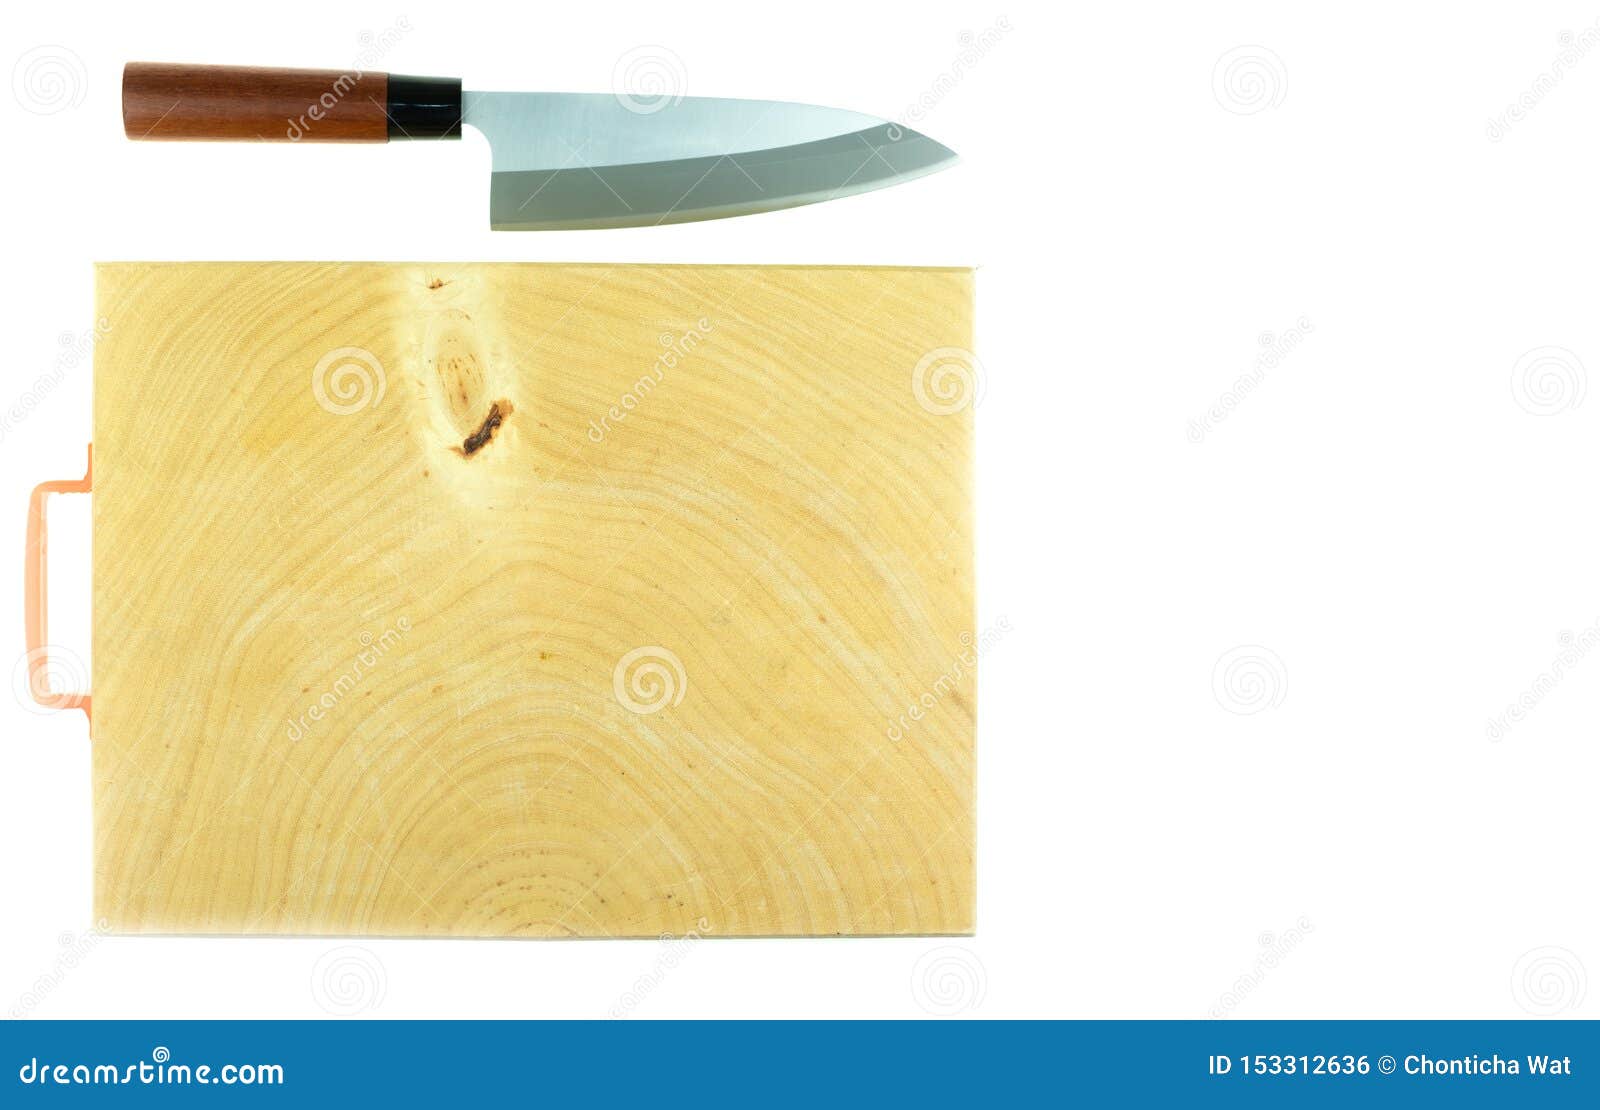 Japanese Kitchen Deba Knife And Wood Butcher Block Countertop